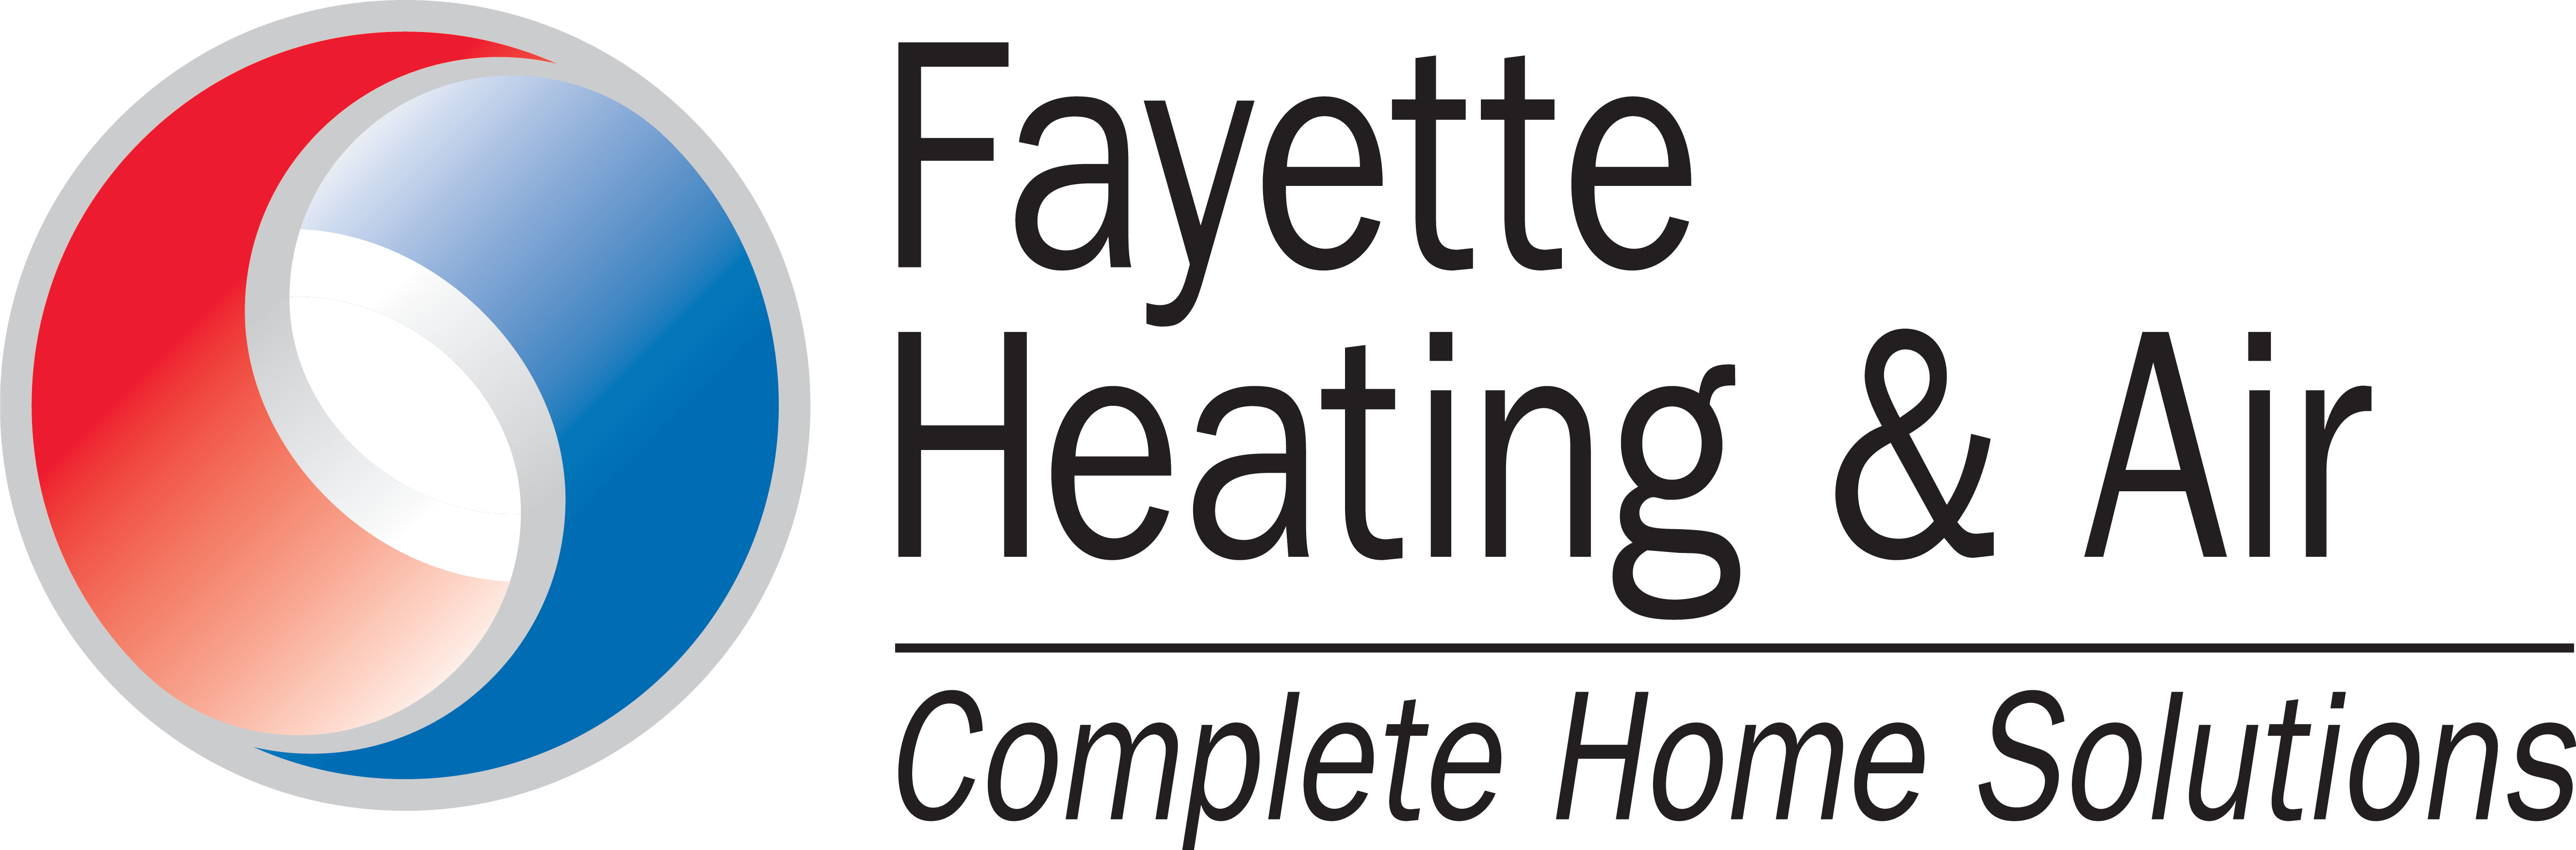 Fayette Heating & Air logo